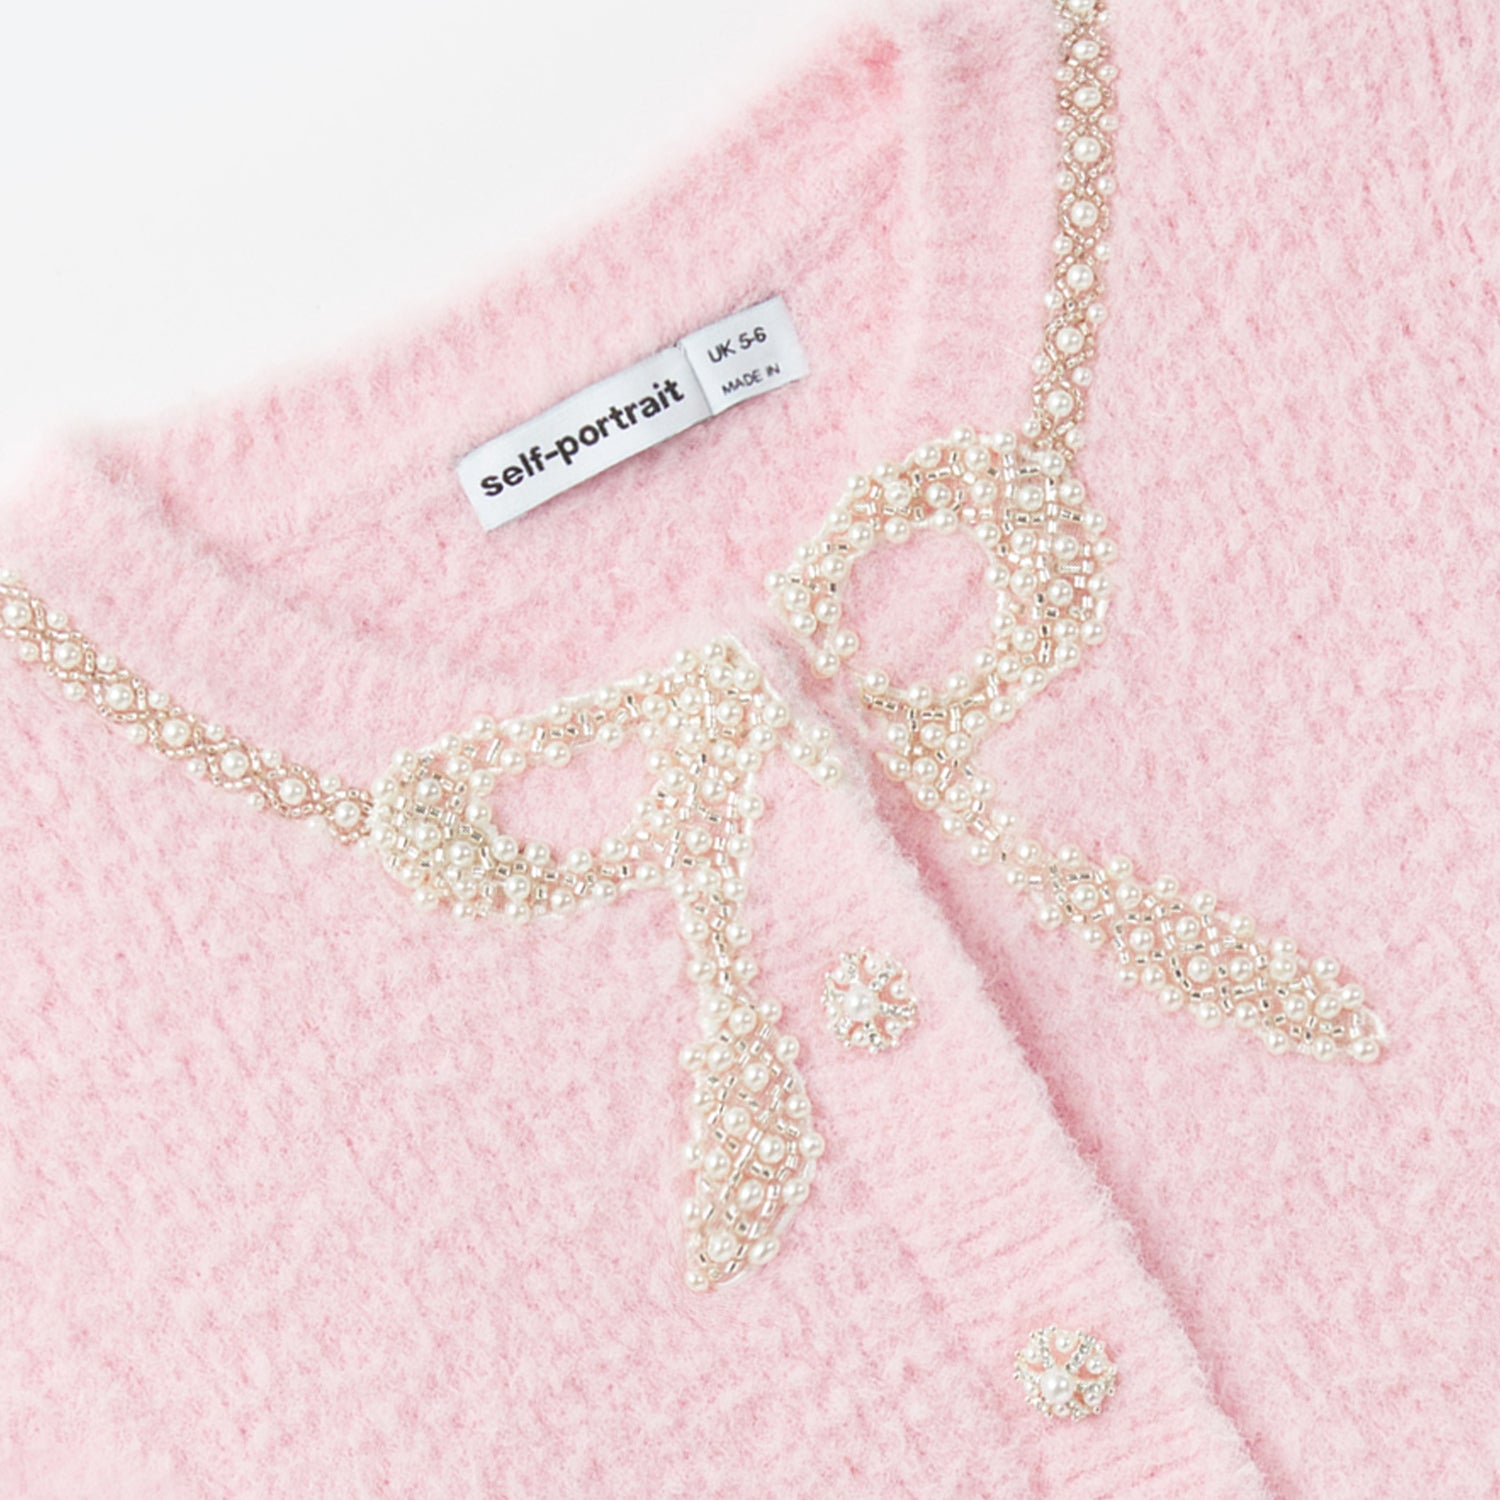 Pink Soft Knit Cardigan